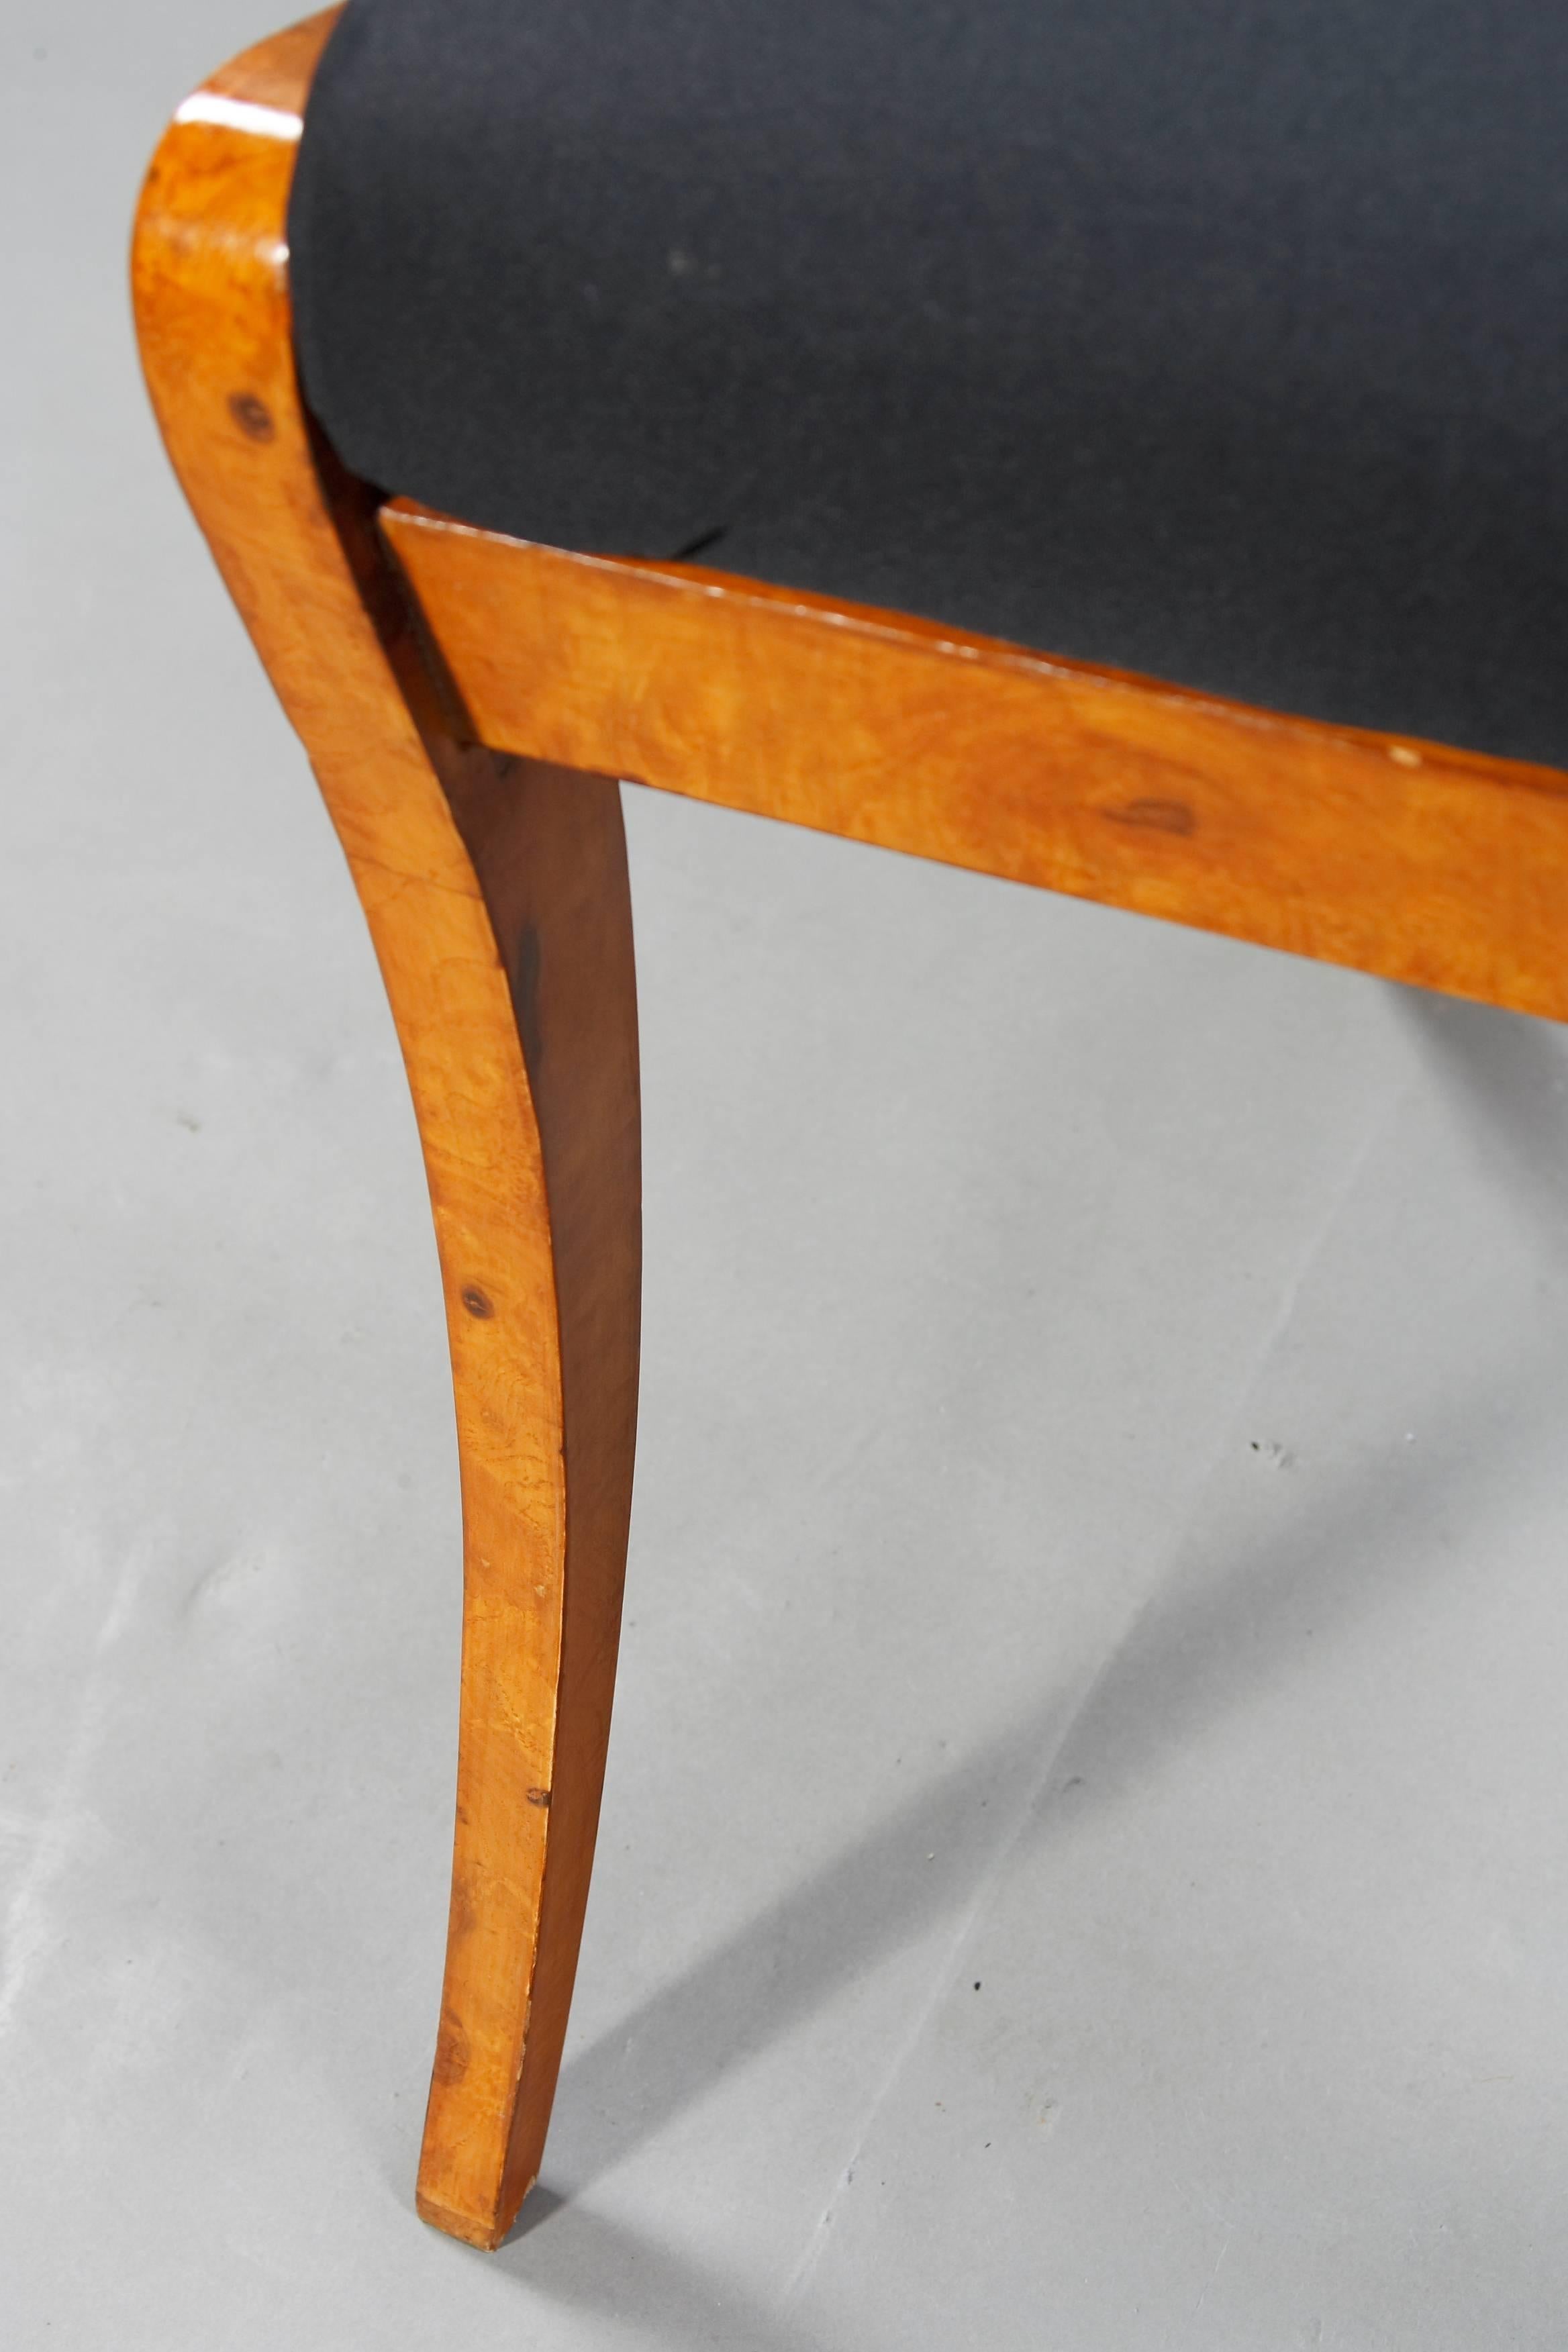 German Side Frame Chair in the Biedermeier Style